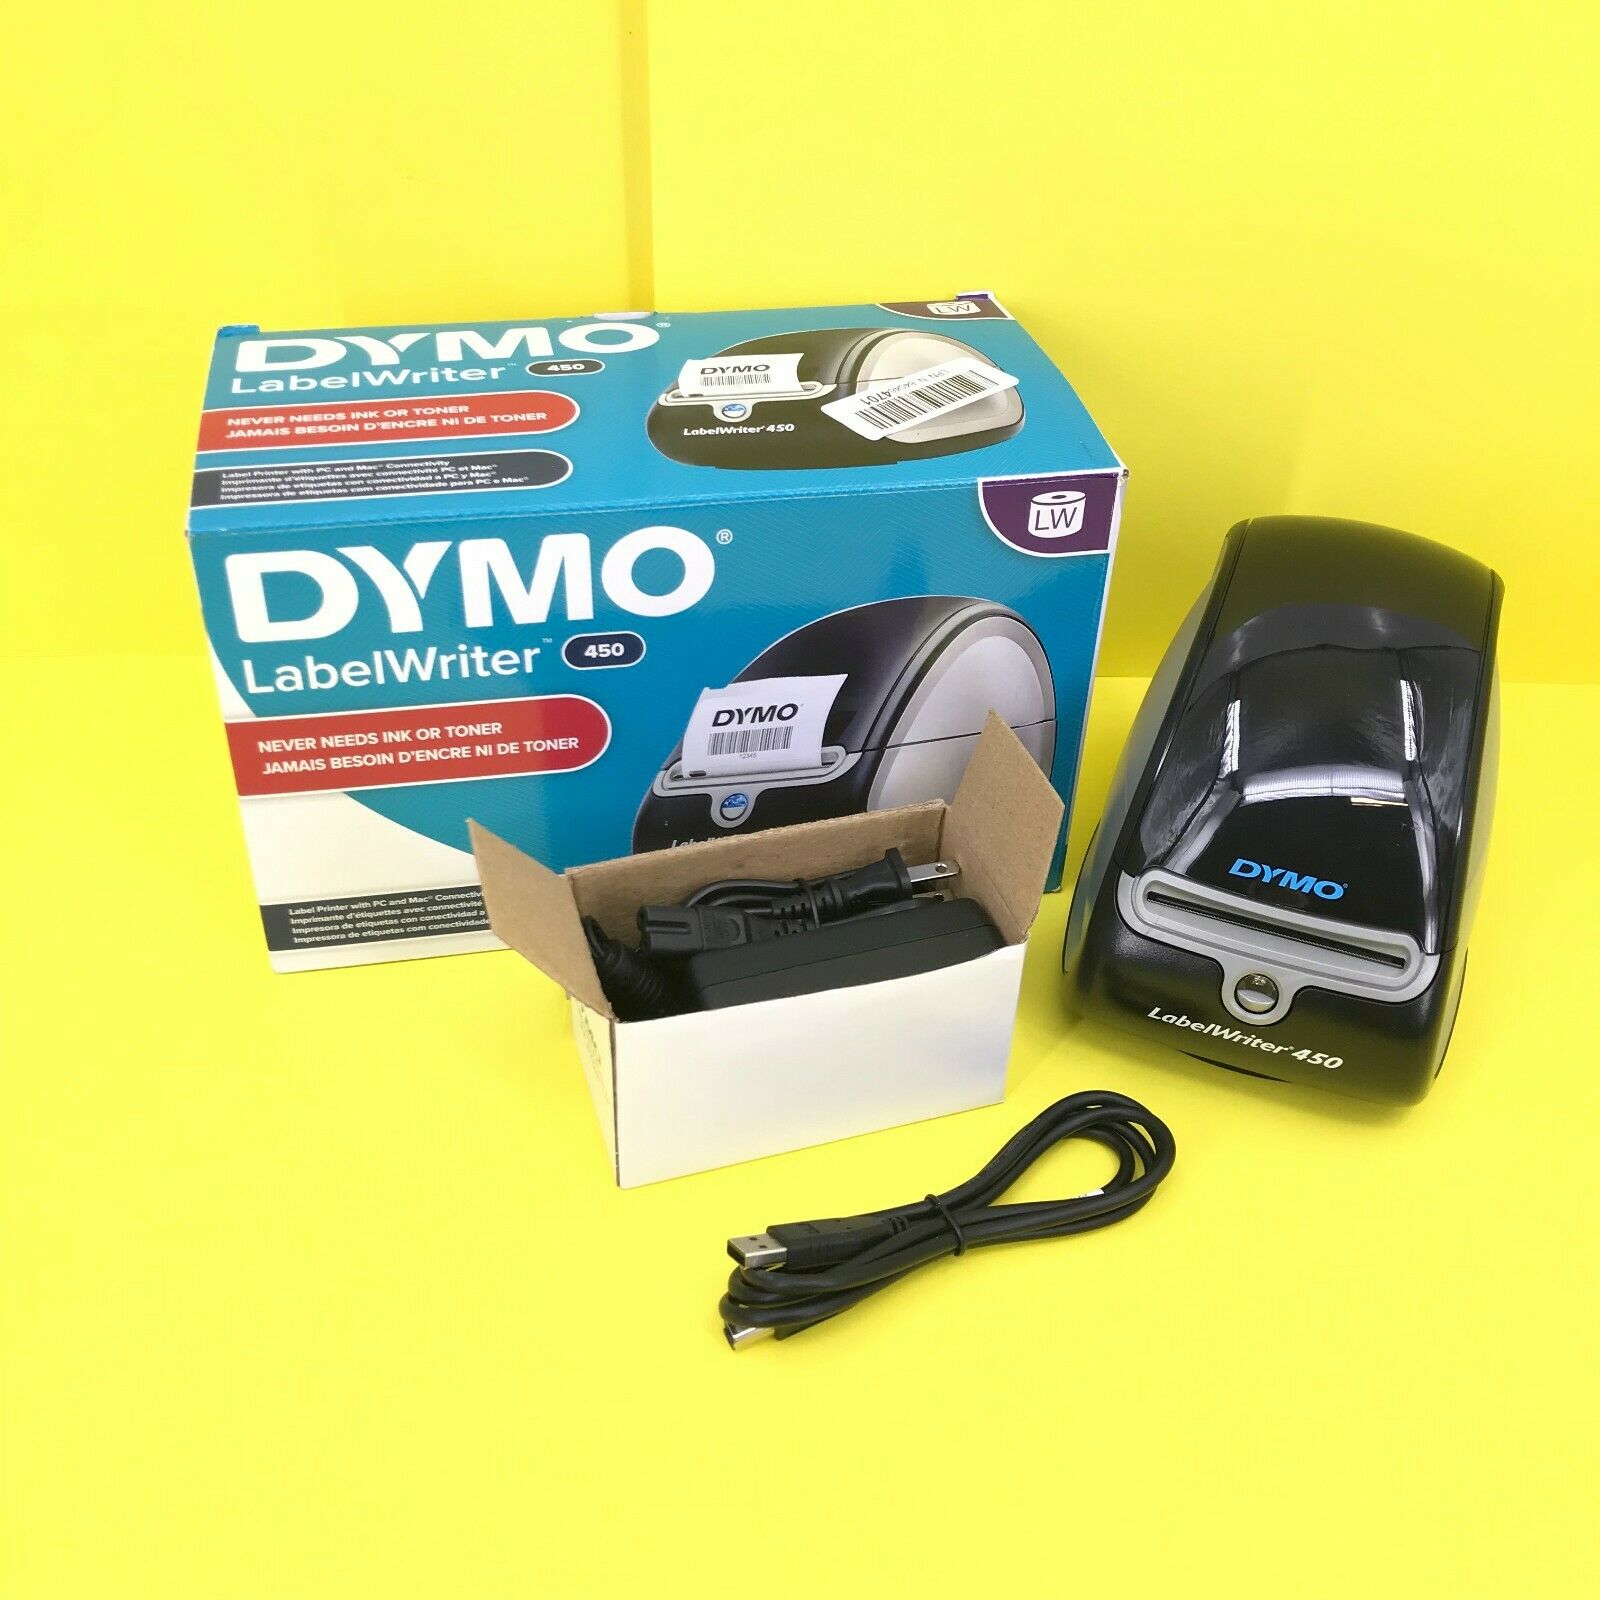 Dymo Label Writer 450 Thermal Label Printer 1750110 For Pc/mac #6573 Z29b2